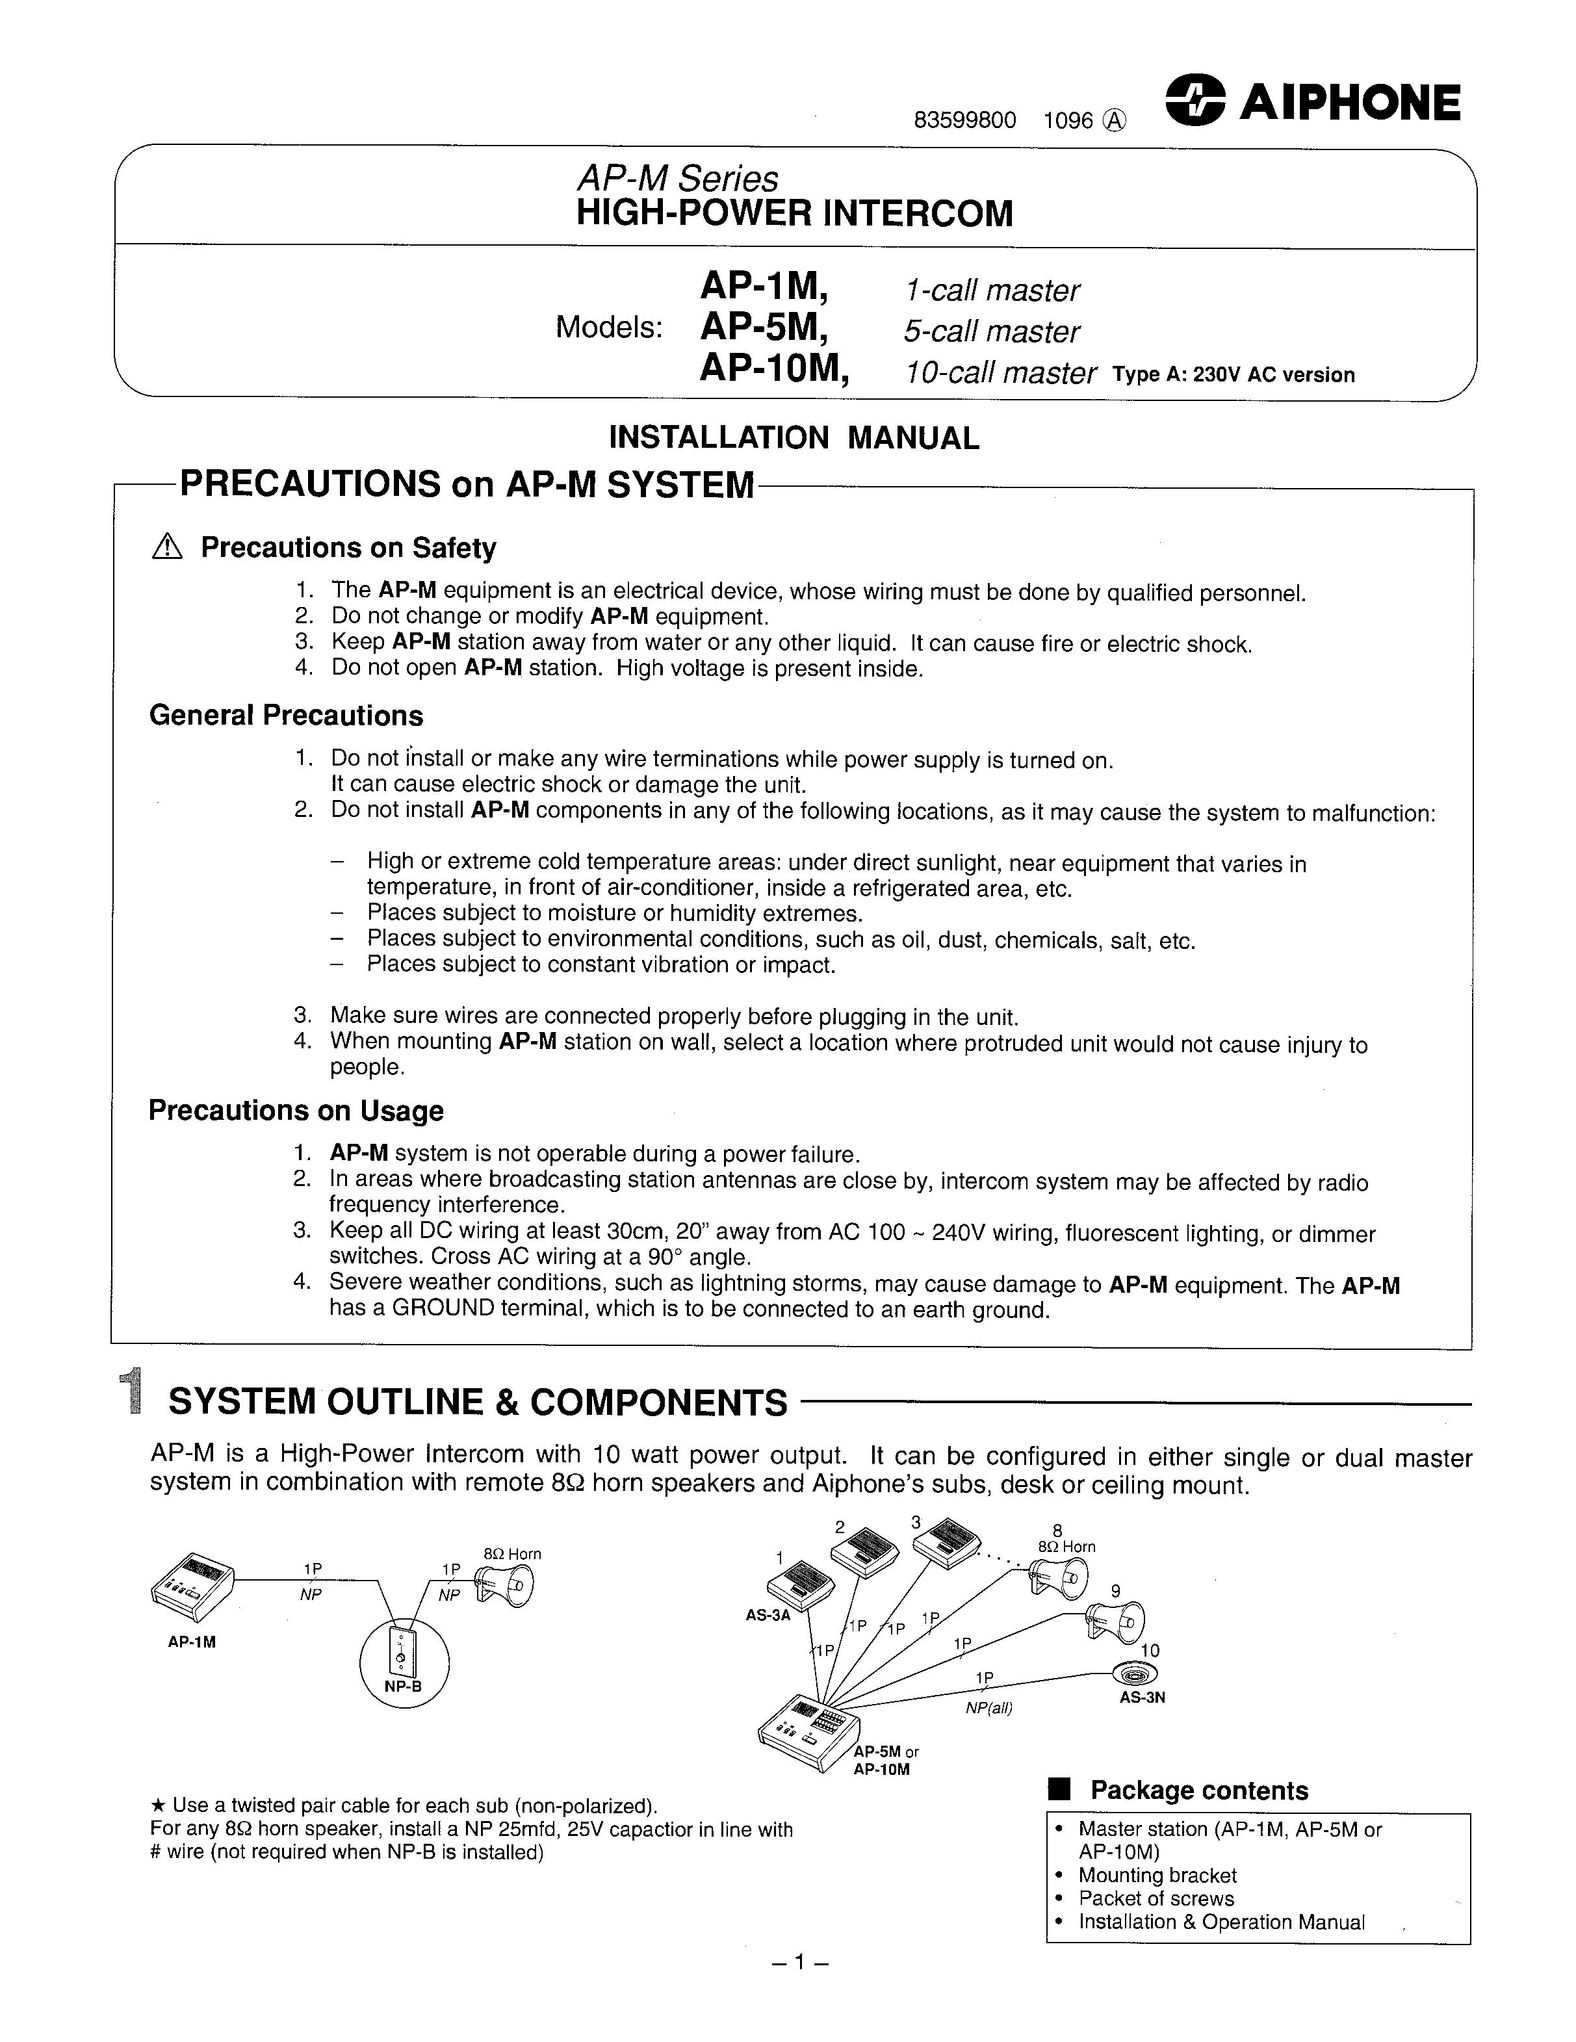 Aiphone AP-1M Intercom System User Manual